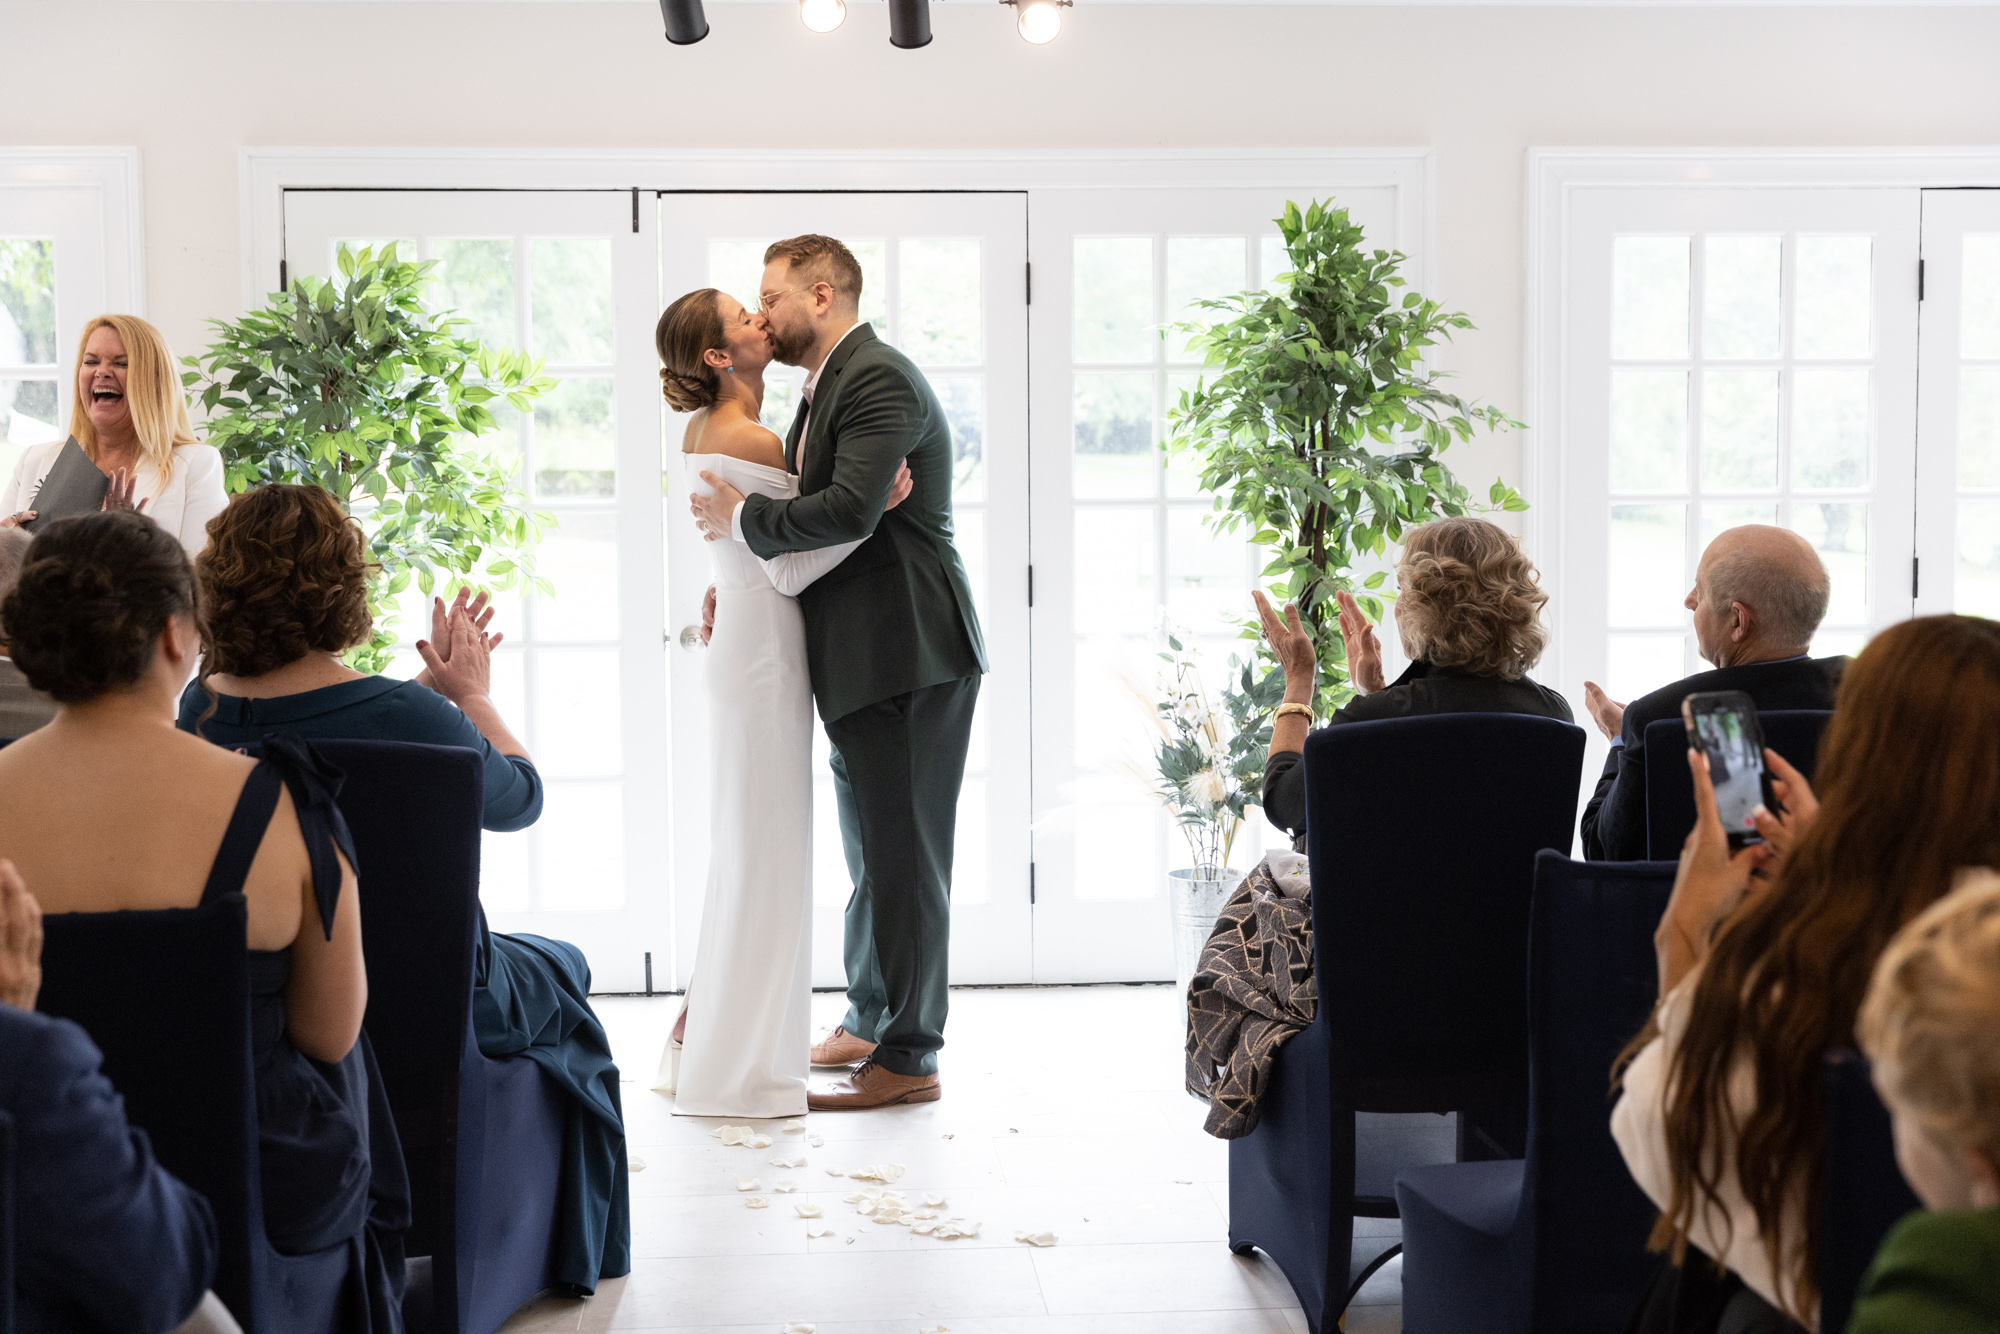 A bride and groom kiss during their modern elegant wedding ceremony at Chimney Hill Estate Inn in Lambertville, NJ